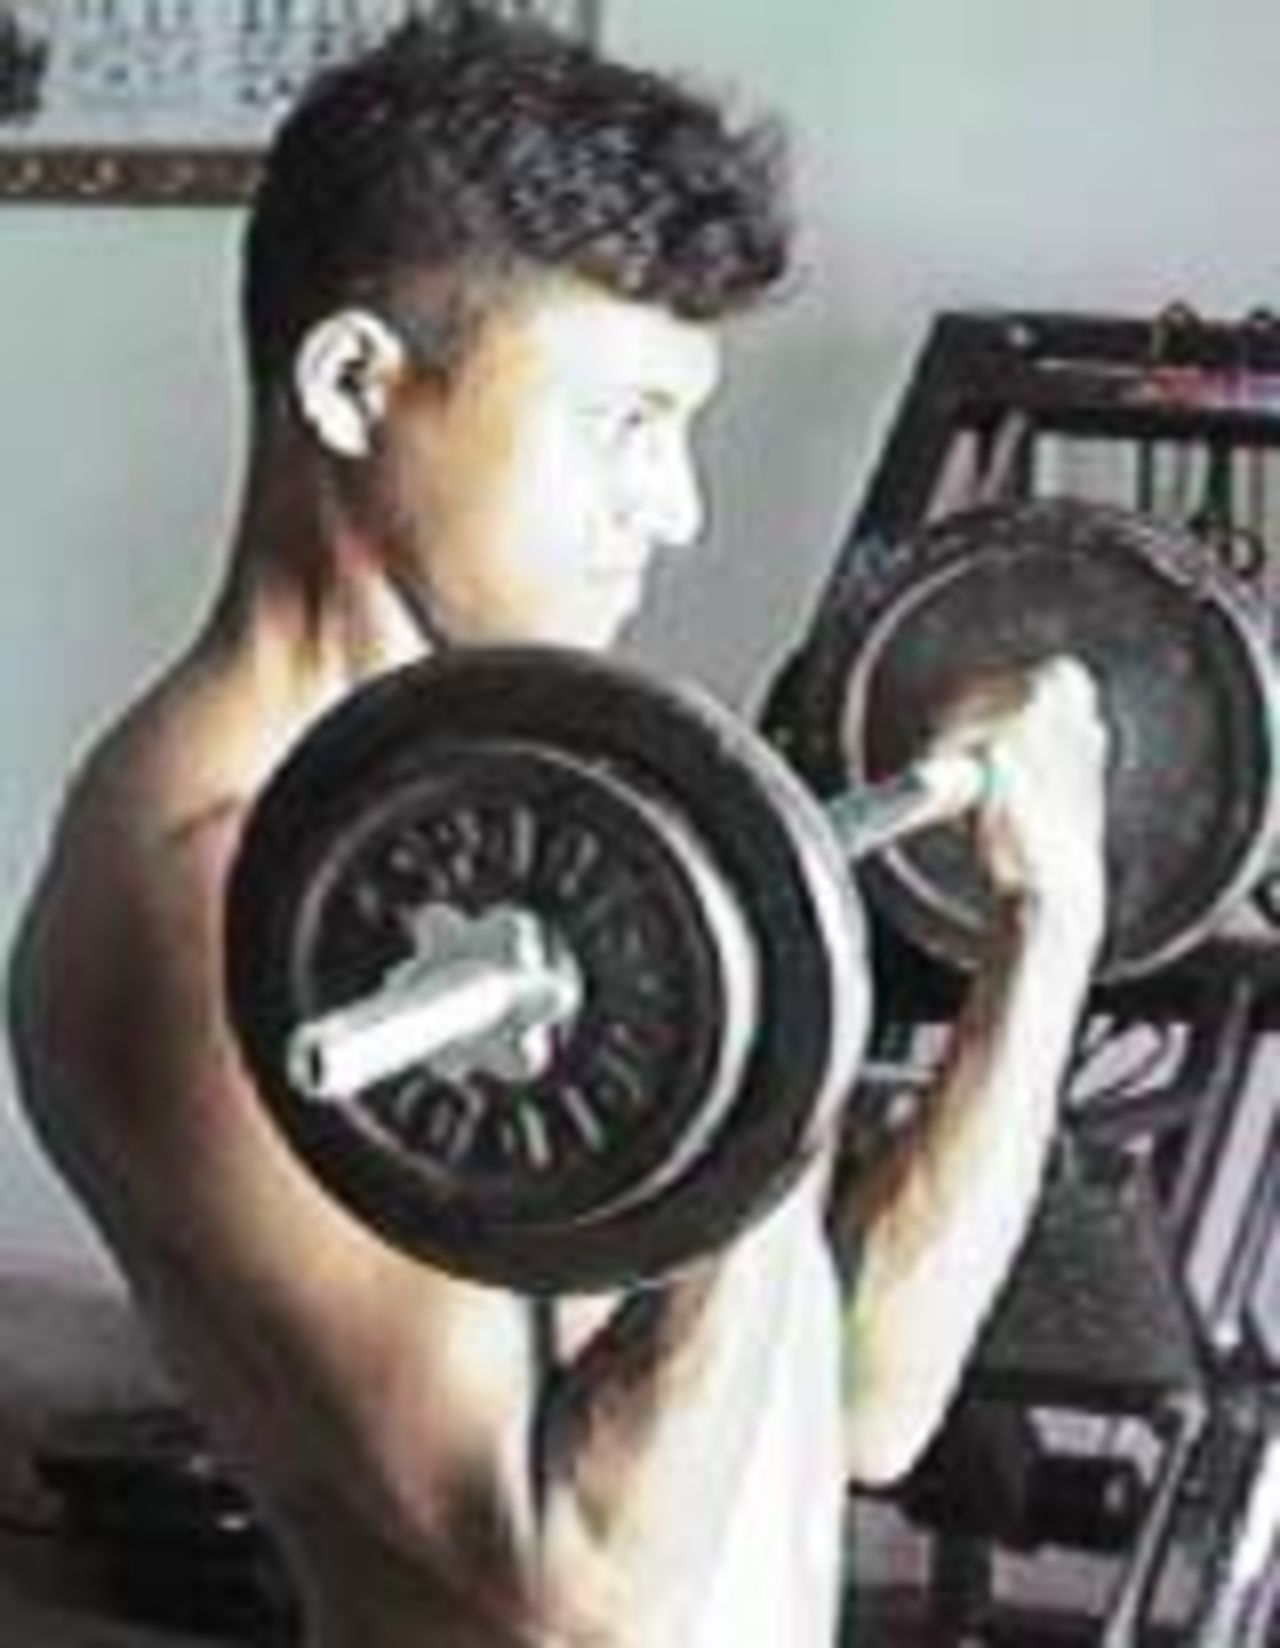 Bikash Ranjan Das is working on muscles